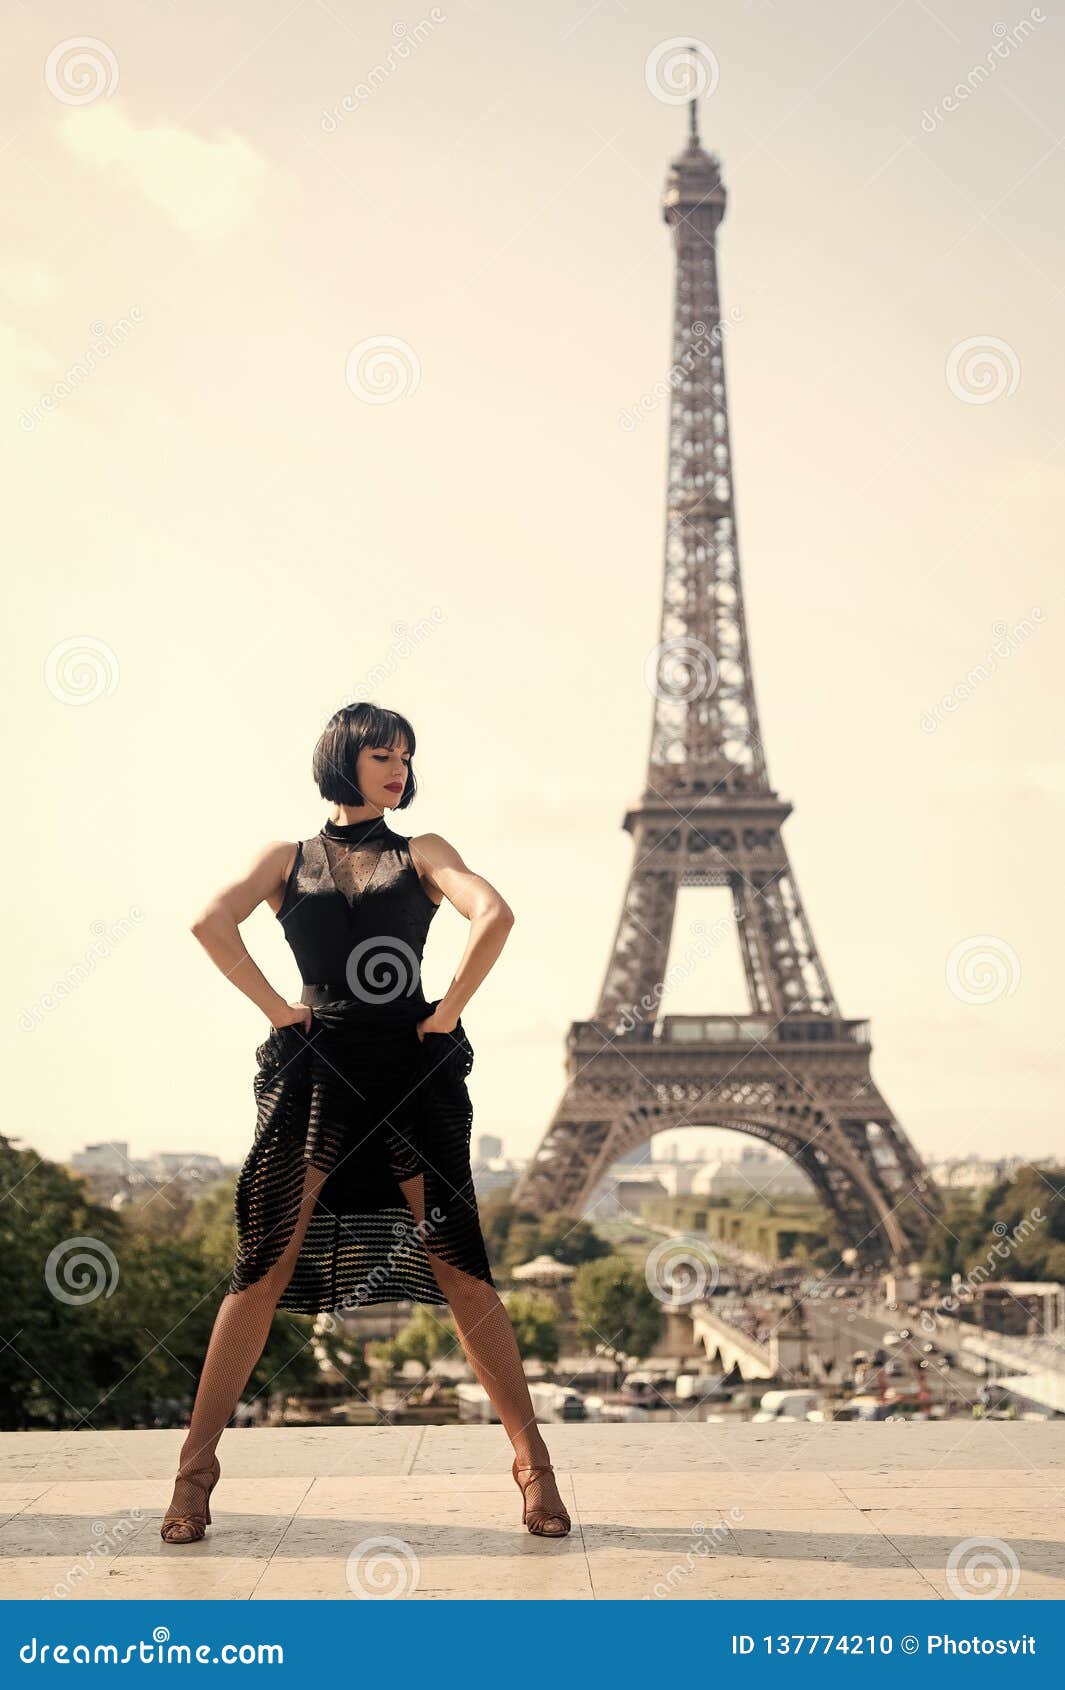 girl dancer front eifel tower paris france beatuiful woman dance pose like eifel tower romantic travel concept girl 137774210